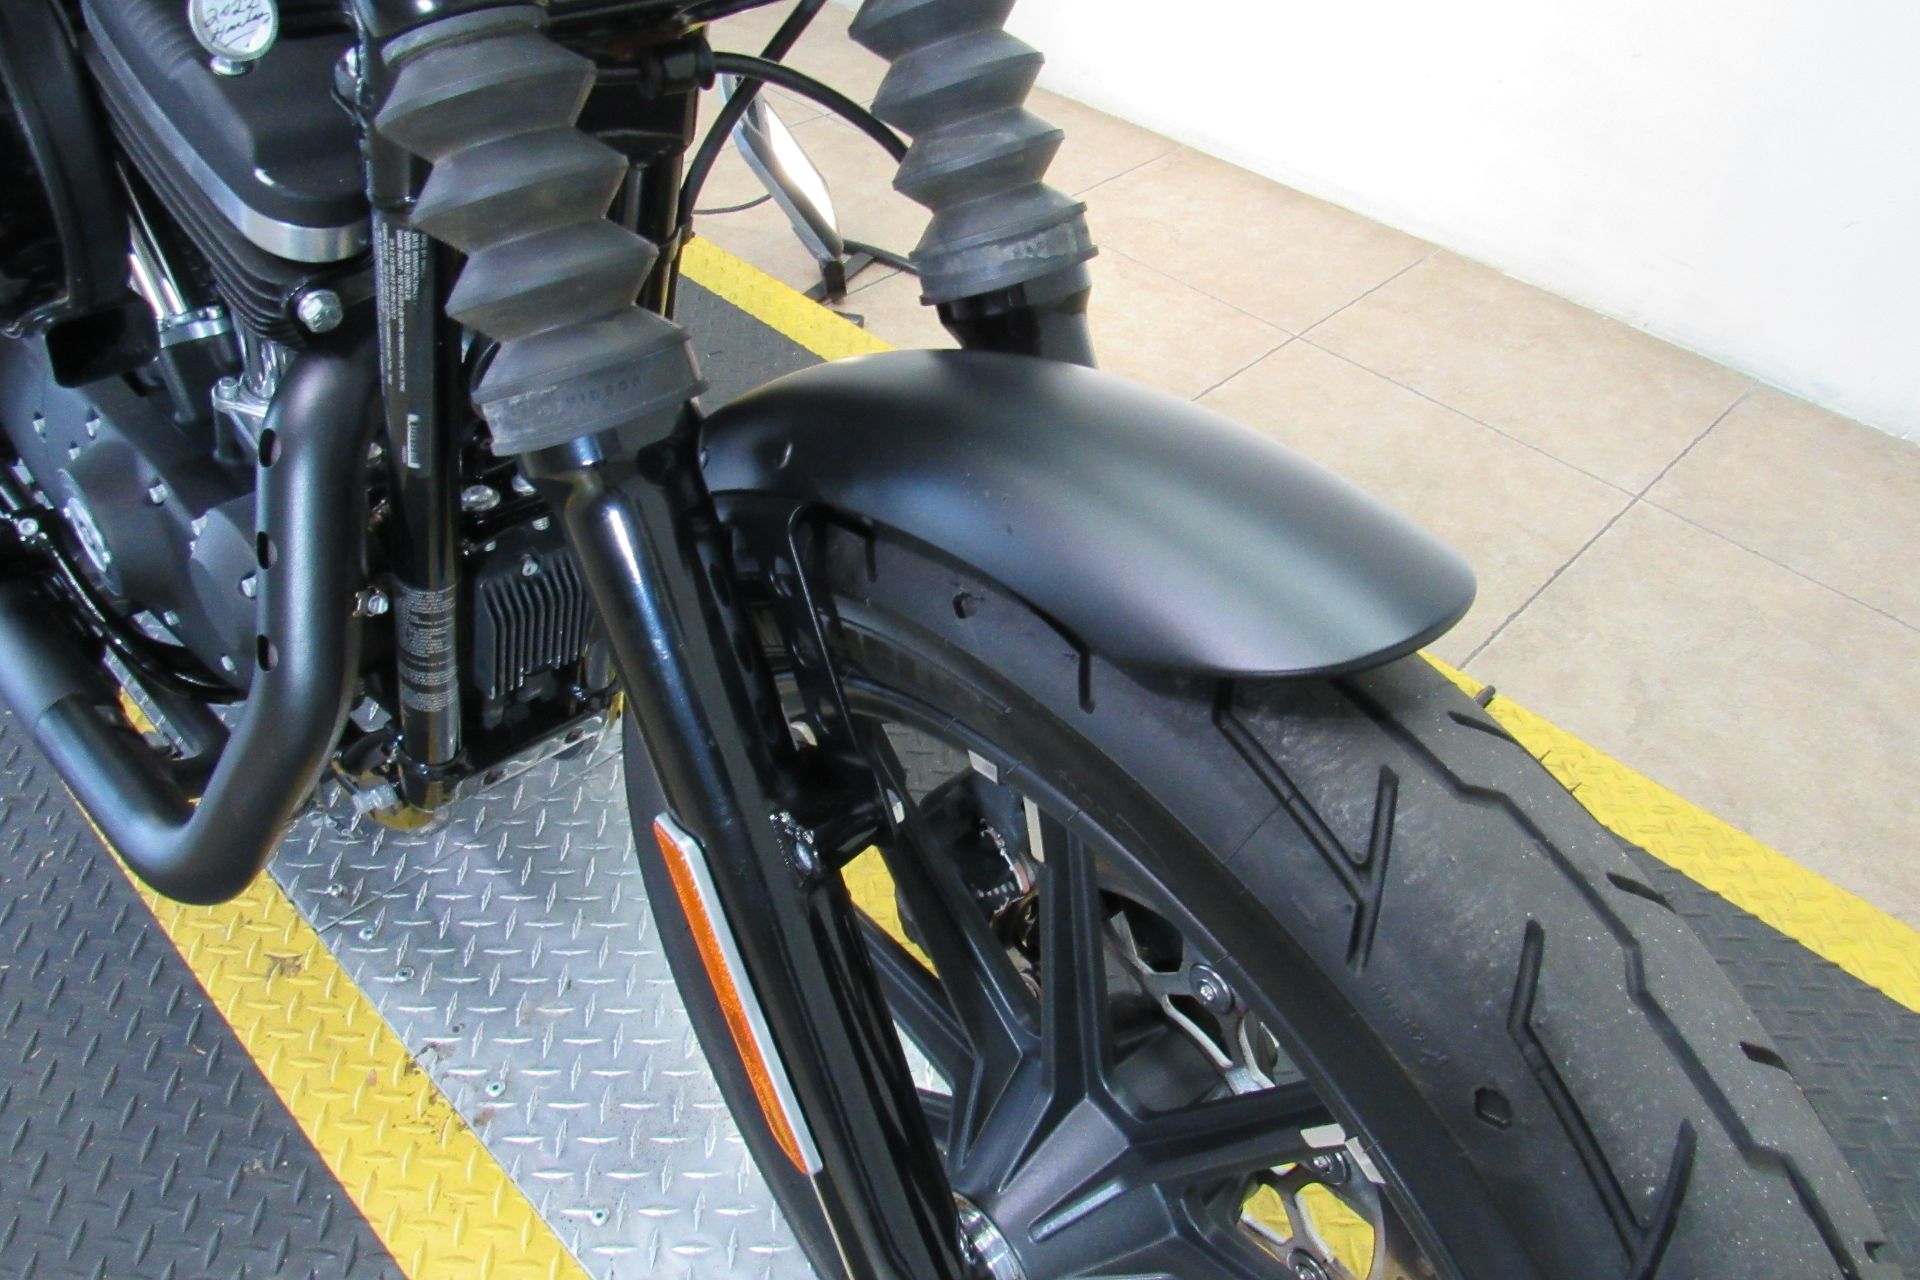 2022 Harley-Davidson Iron 883™ in Temecula, California - Photo 21